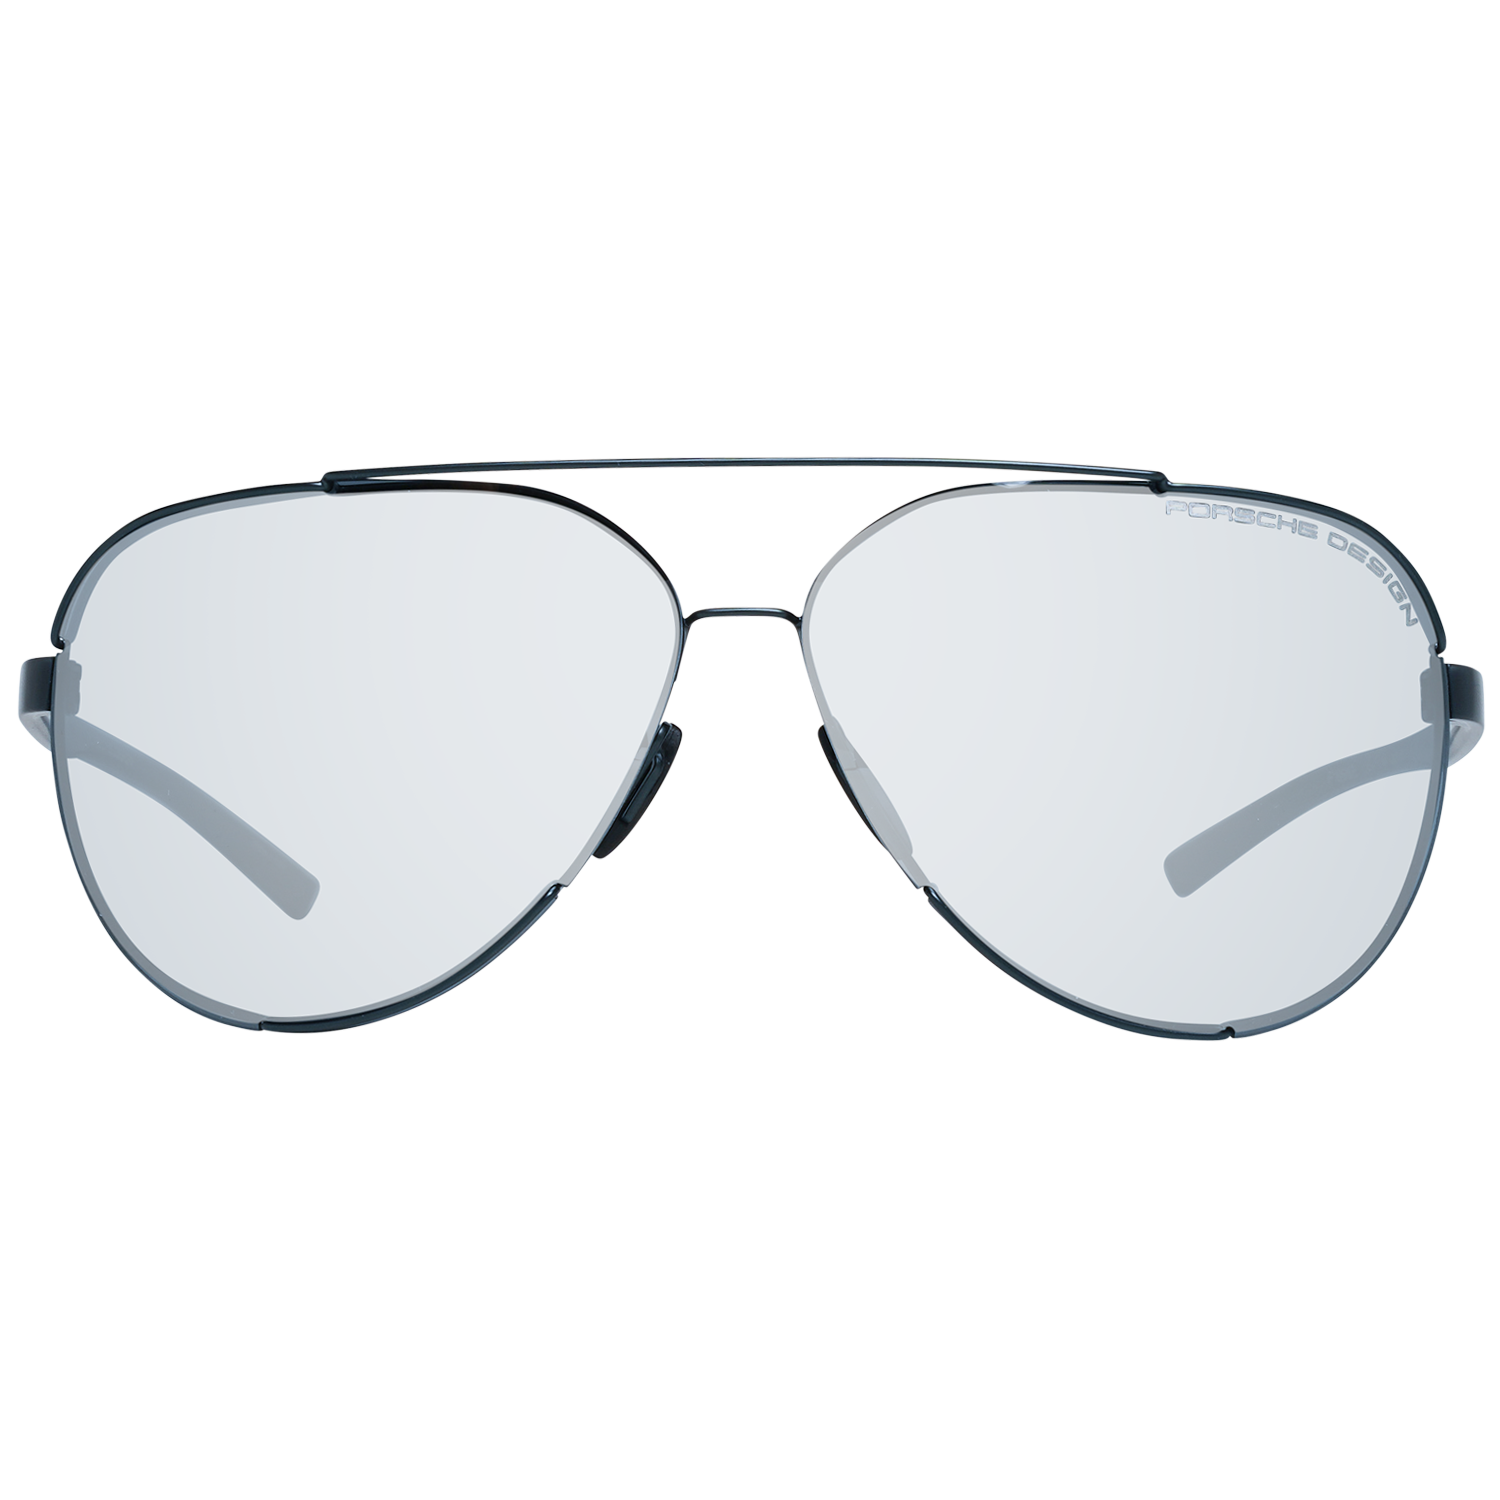 Porsche Design Sunglasses Porsche Design Sunglasses P8682 C 64 Mirrored Eyeglasses Eyewear UK USA Australia 